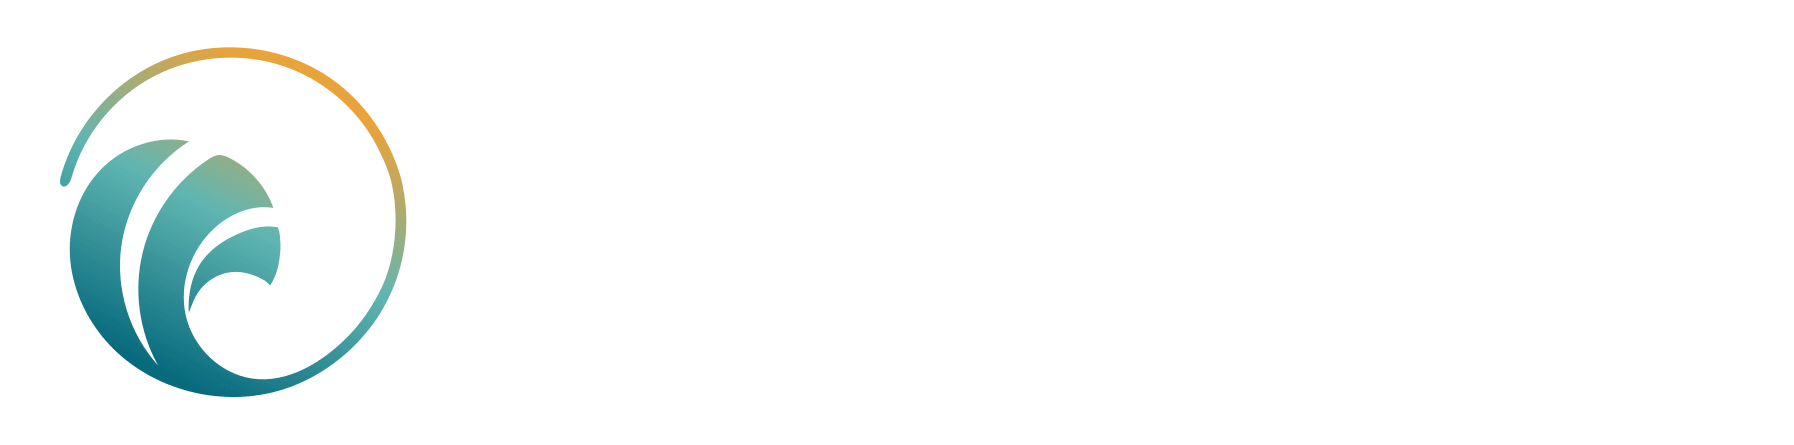 Orchard Dental Associates logo with white text